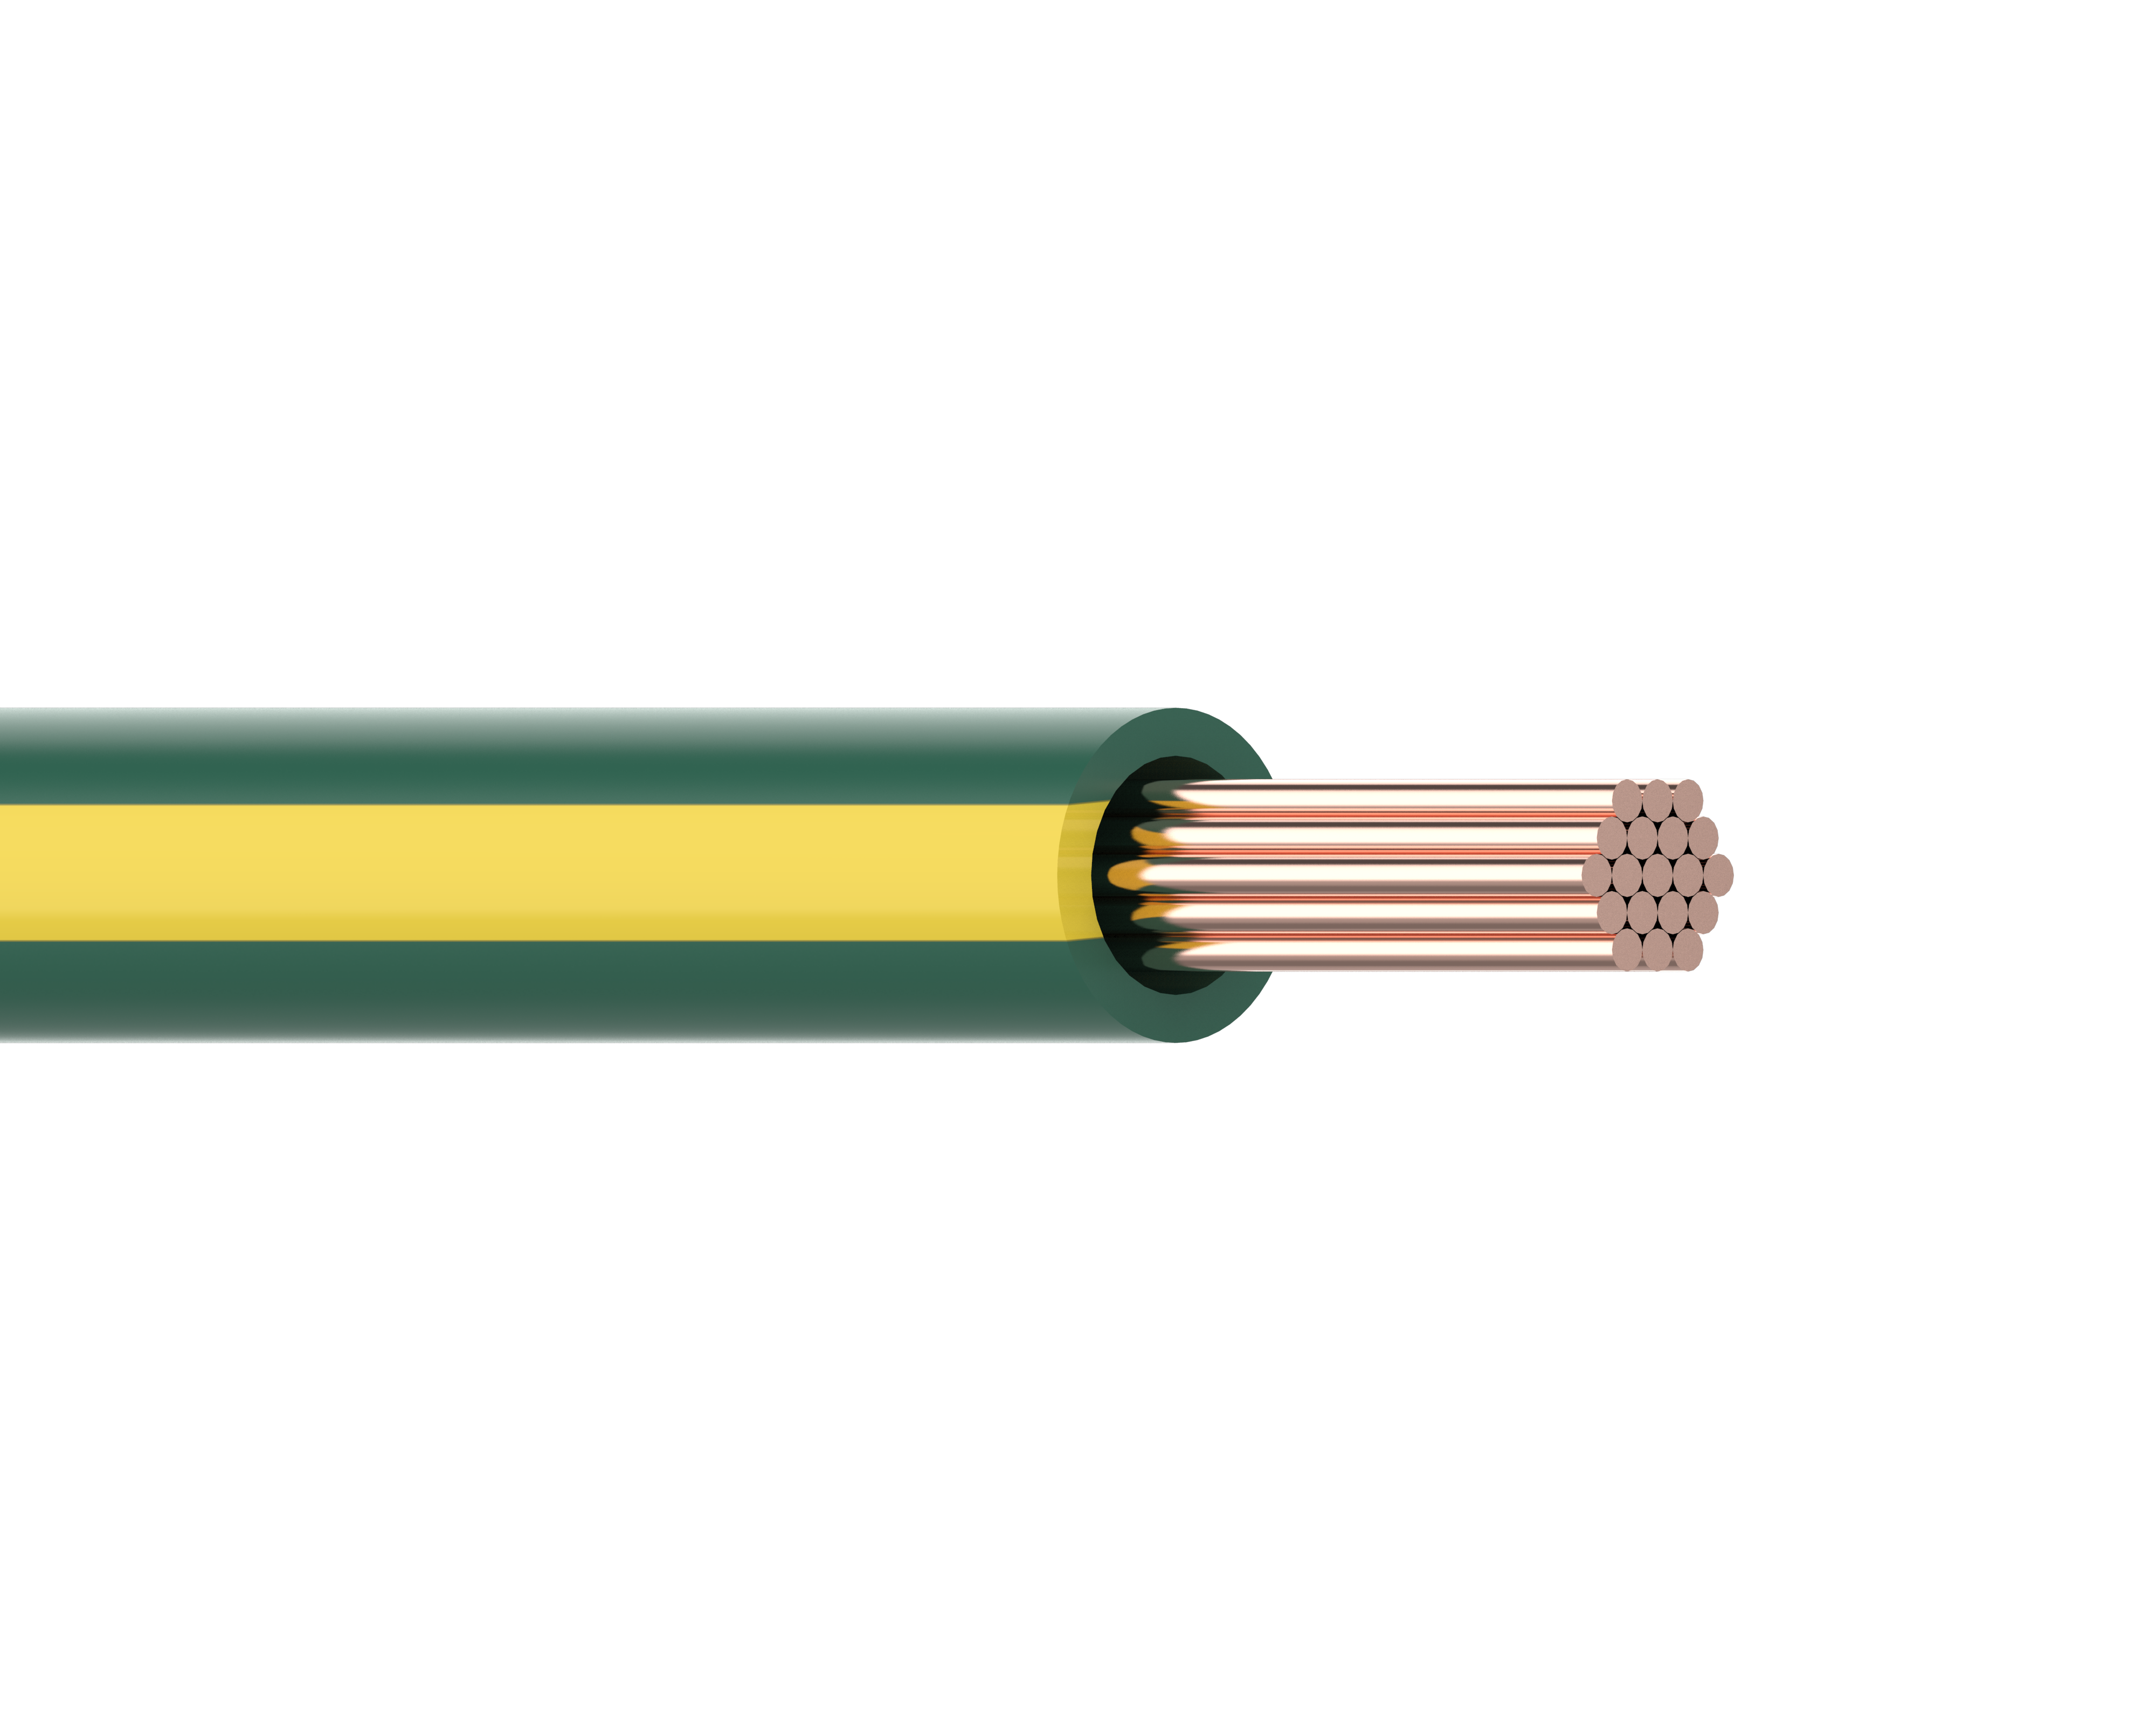 Primary wires V1 绿色+黄色条纹